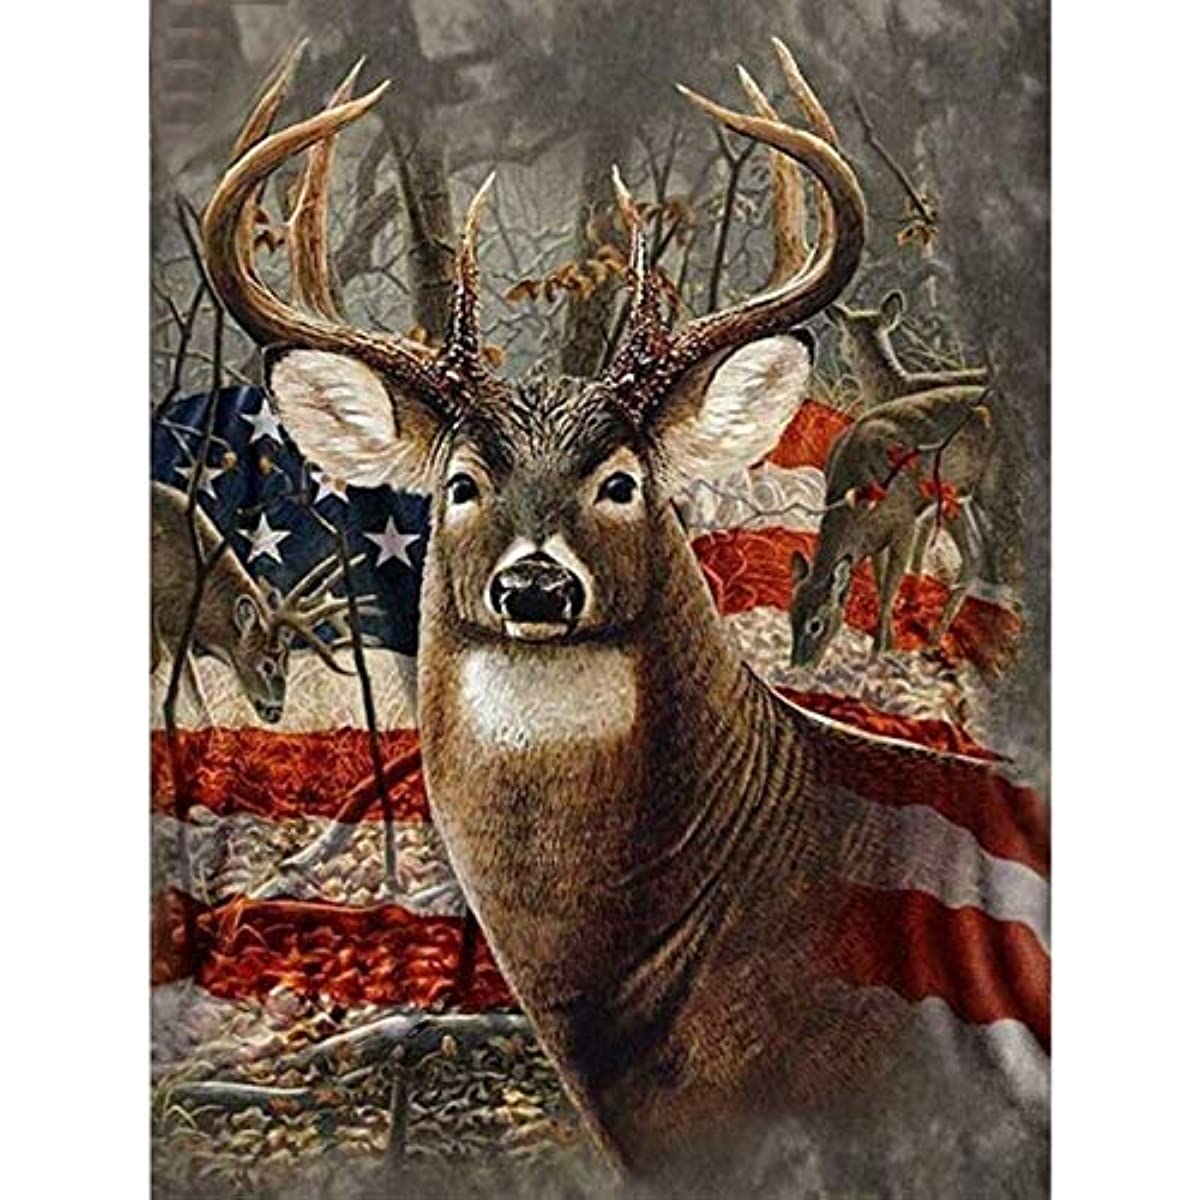 Lanarte / PN-0189502 Proud Red Deer / Diamond Painting Kit 